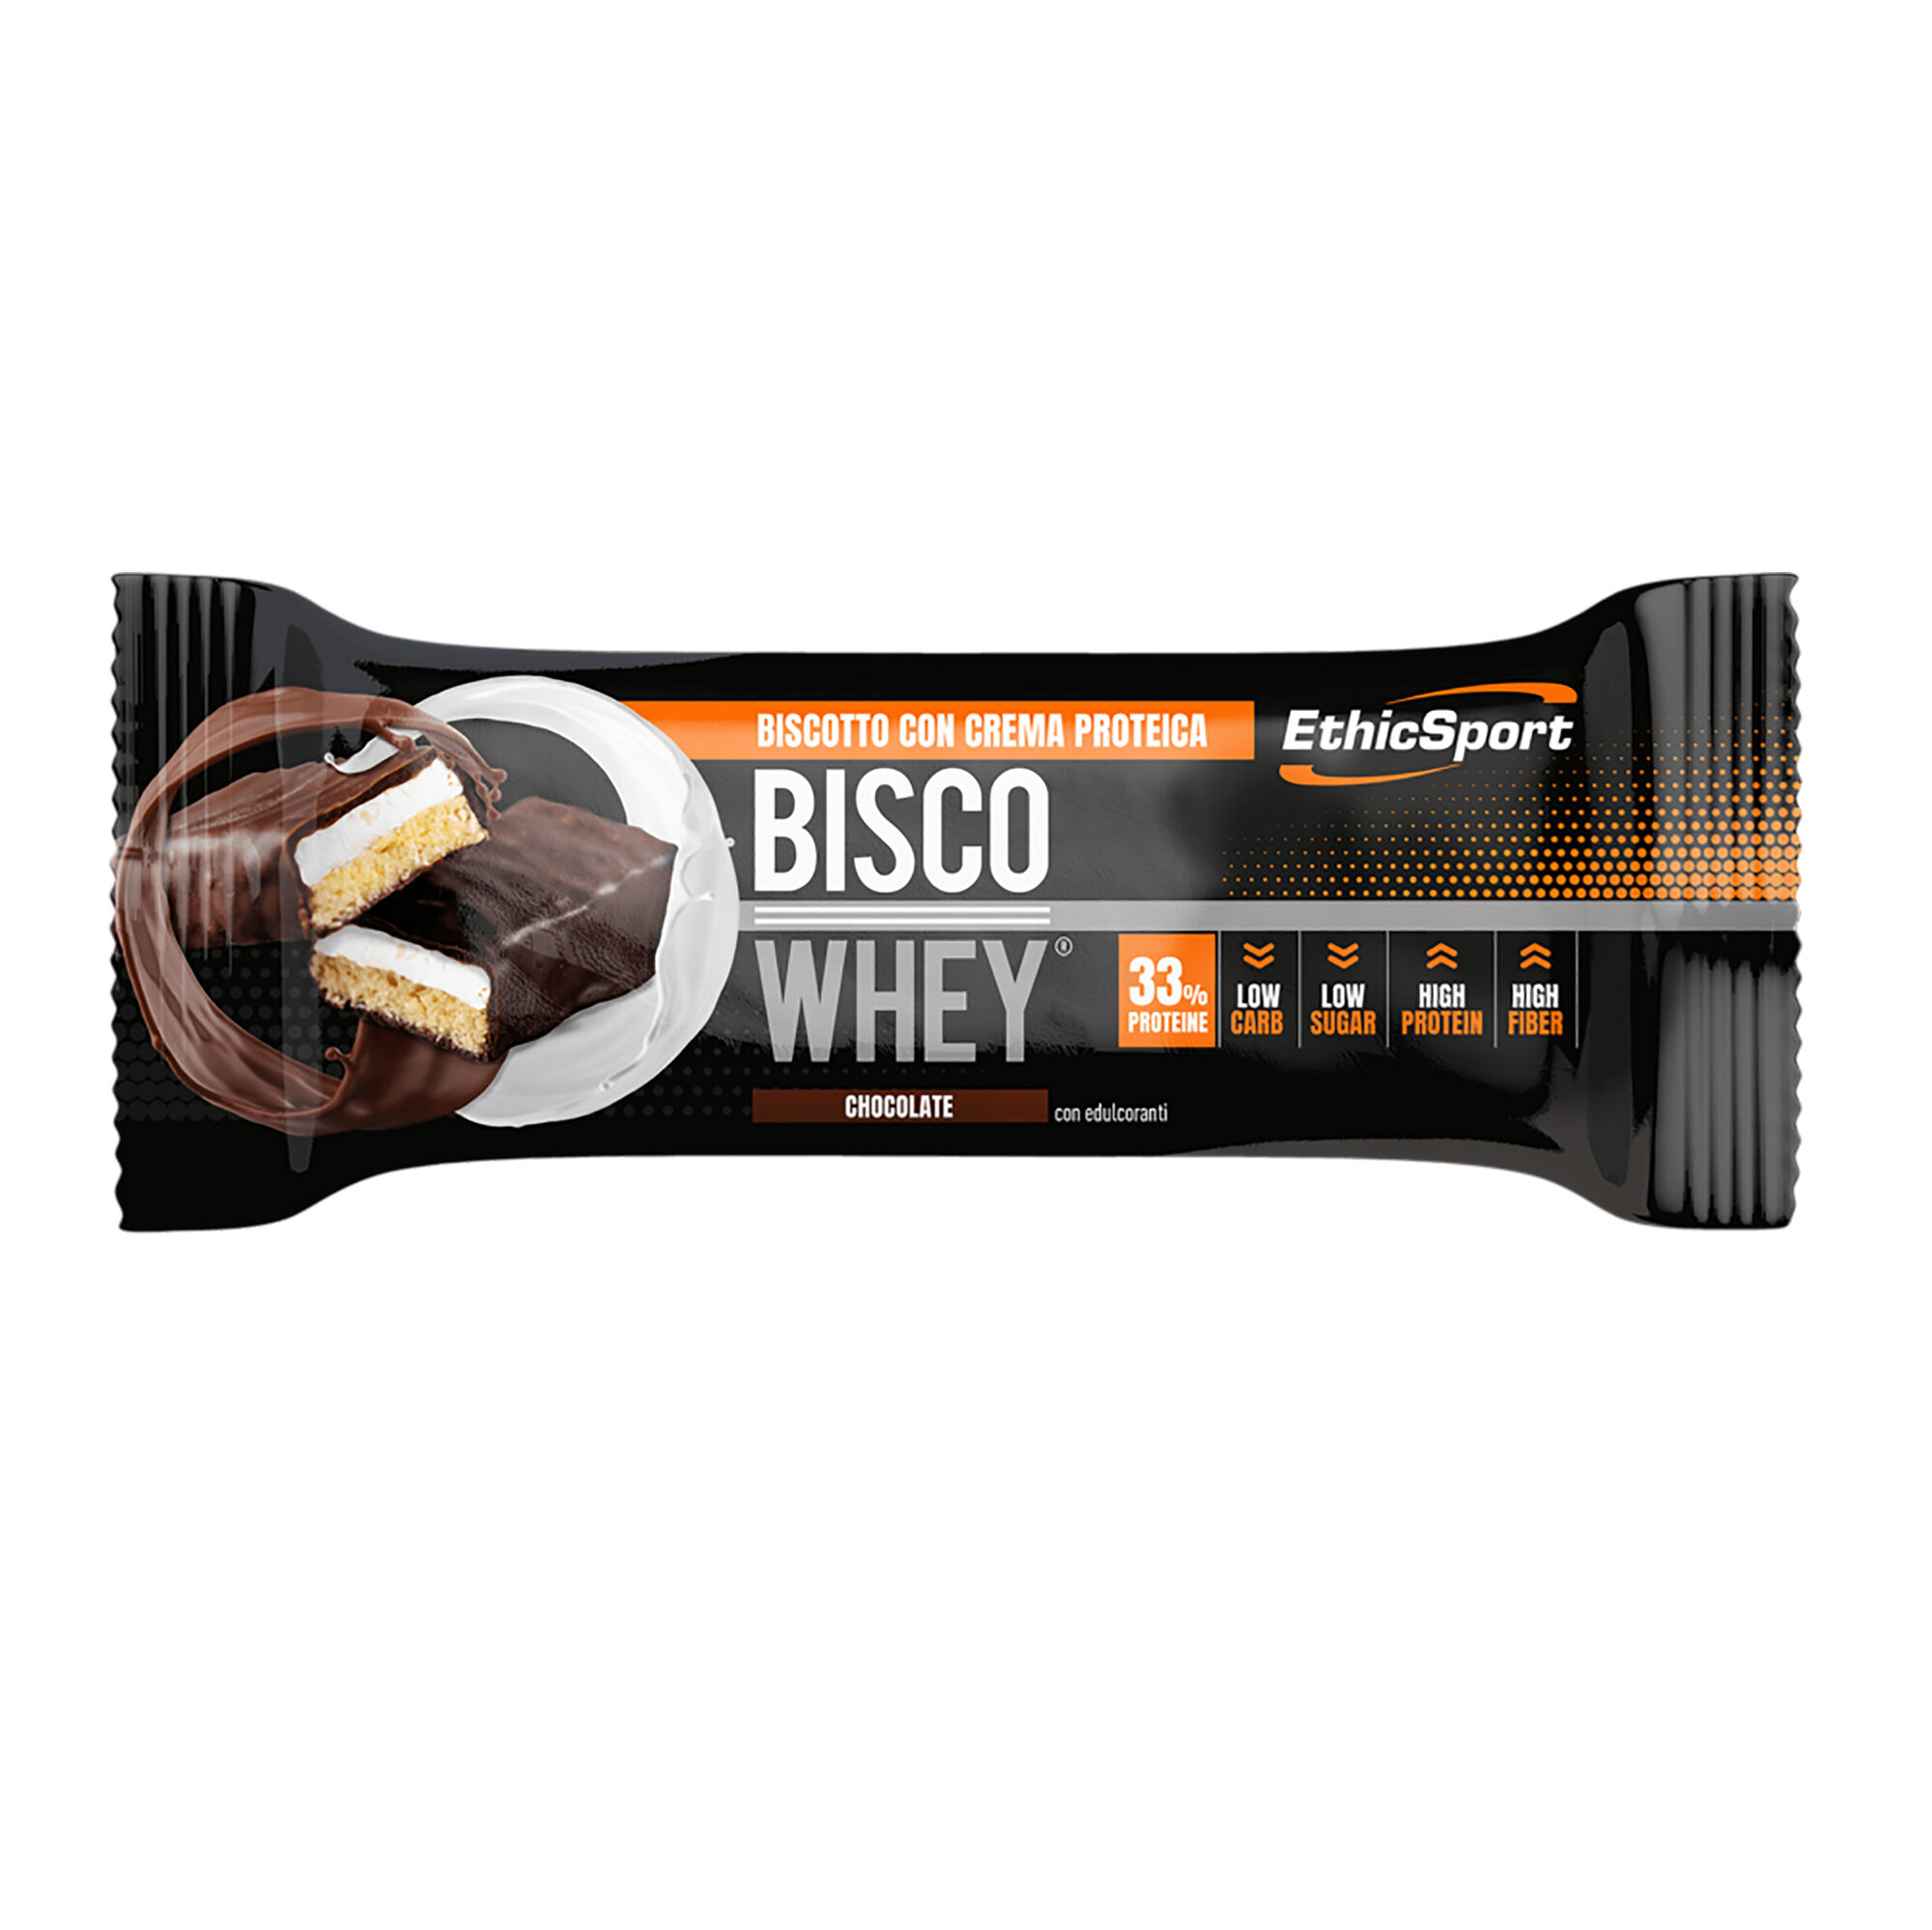 ETHICSPORT BISCO WHEY Chocolate - Barretta 40g.  